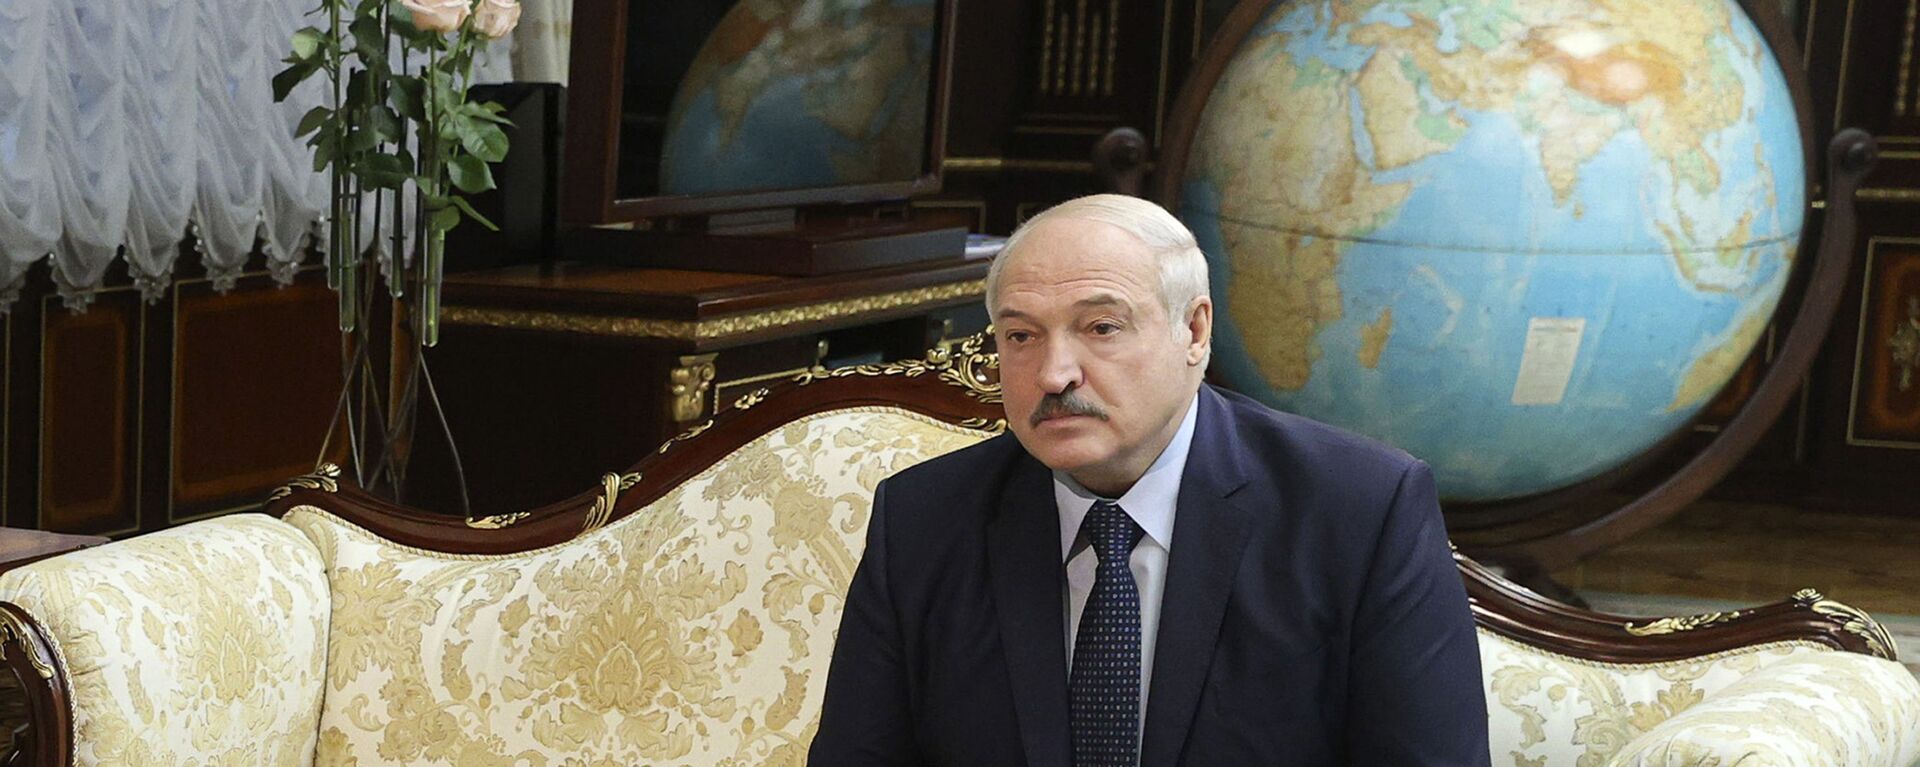 Президент Белоруссии Александр Лукашенко - Sputnik Литва, 1920, 06.07.2021